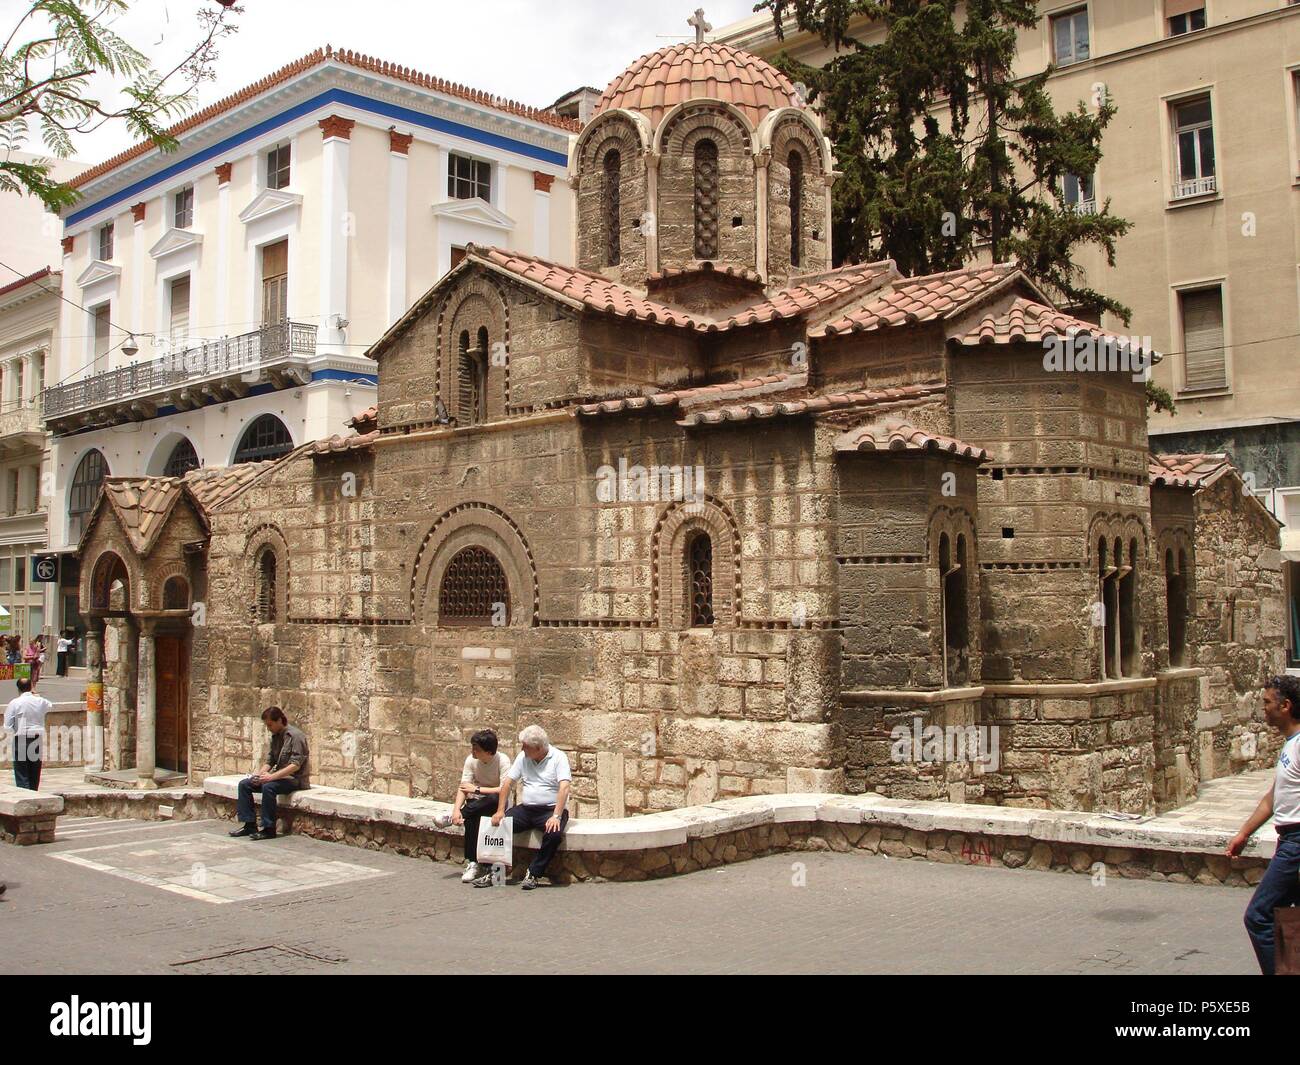 La Iglesia de PANAGIA KAPNIKAREA - IGLESIA BIZANTINA CONSTRUIDA EN EL SIGLO XI. Posizione: Iglesia de KAPNIKAREA, Atene, Grecia. Foto Stock